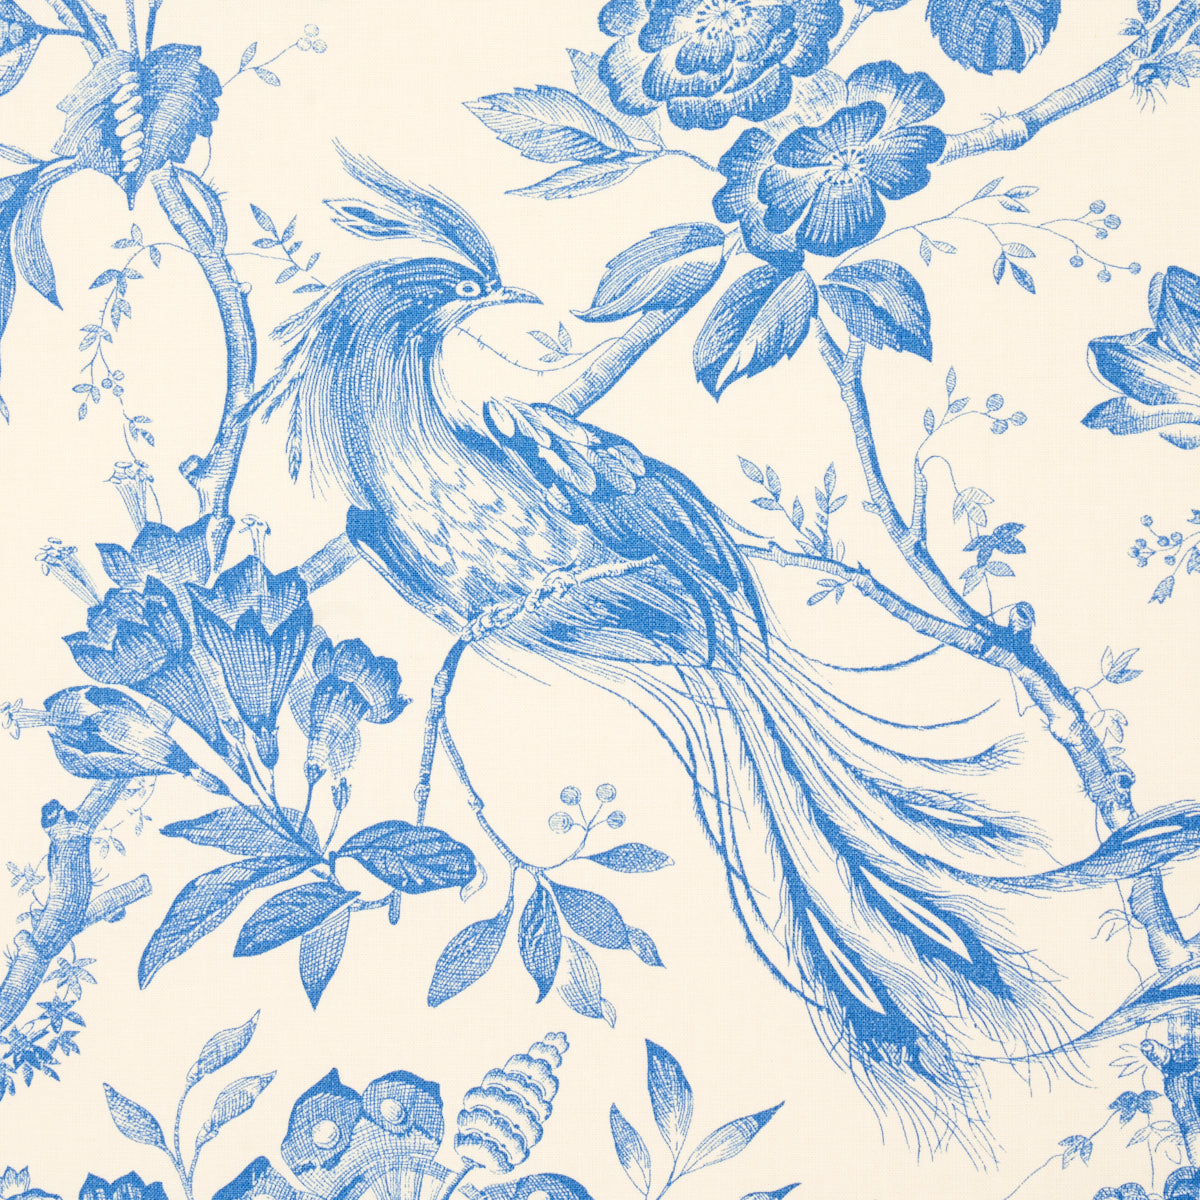 BIRDS OF PARADISE | BLUE